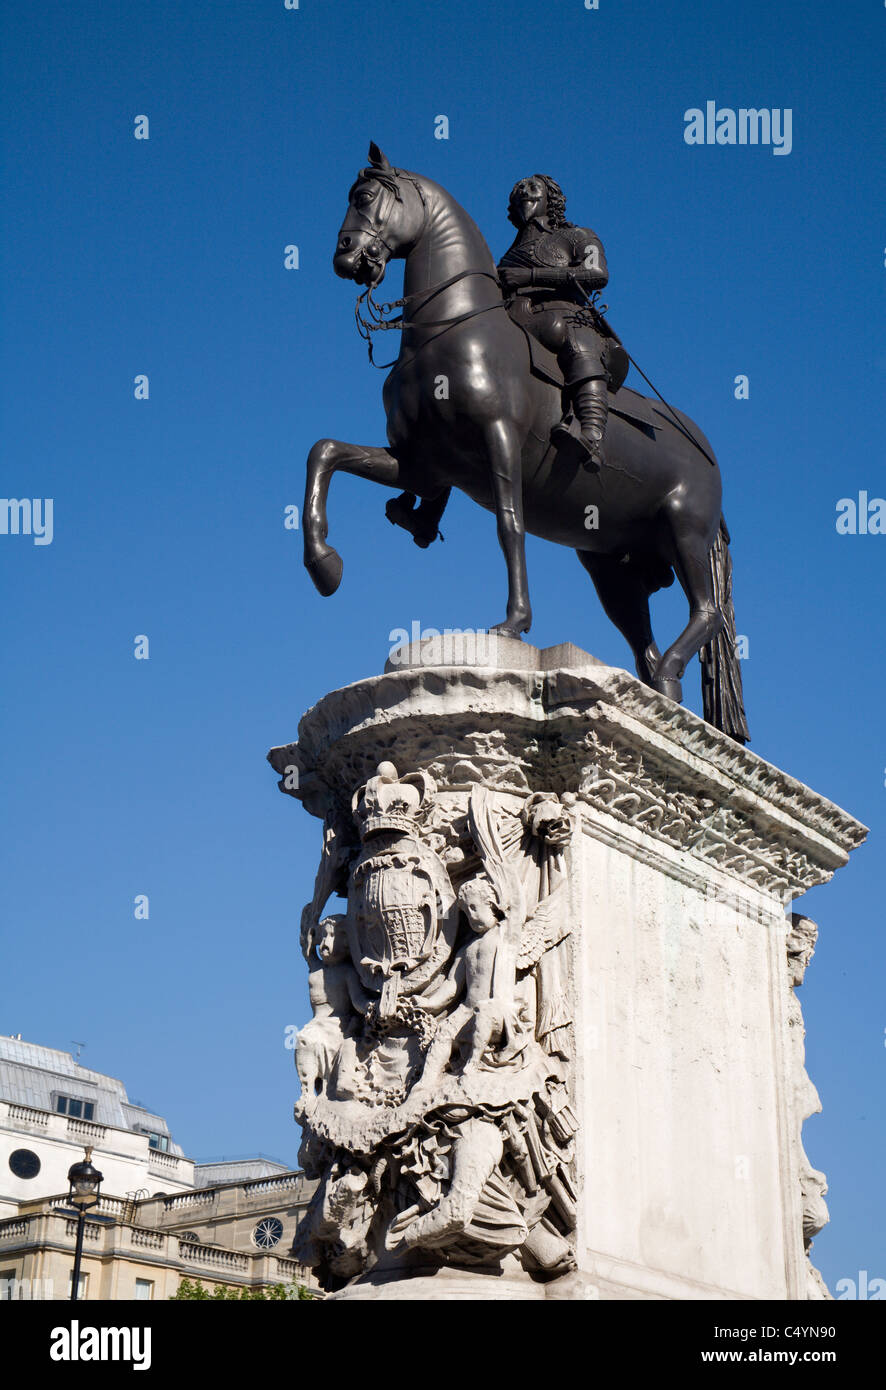 Londres - statue du roi Charles I - Trafalgar square Banque D'Images